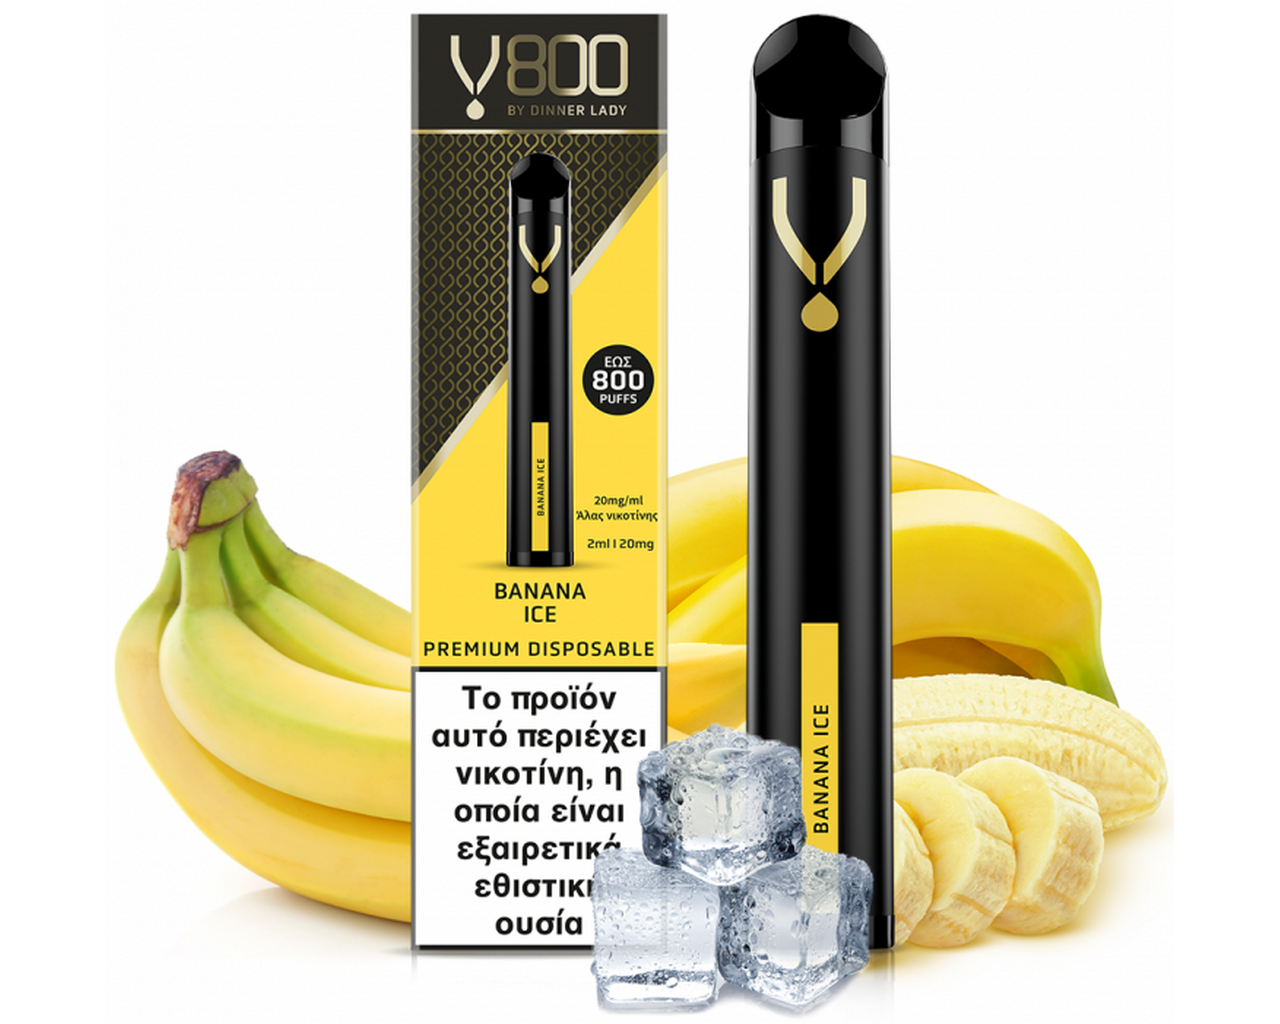 Dinner Lady V800 Disposable Banana Ice 2ml | 20mg